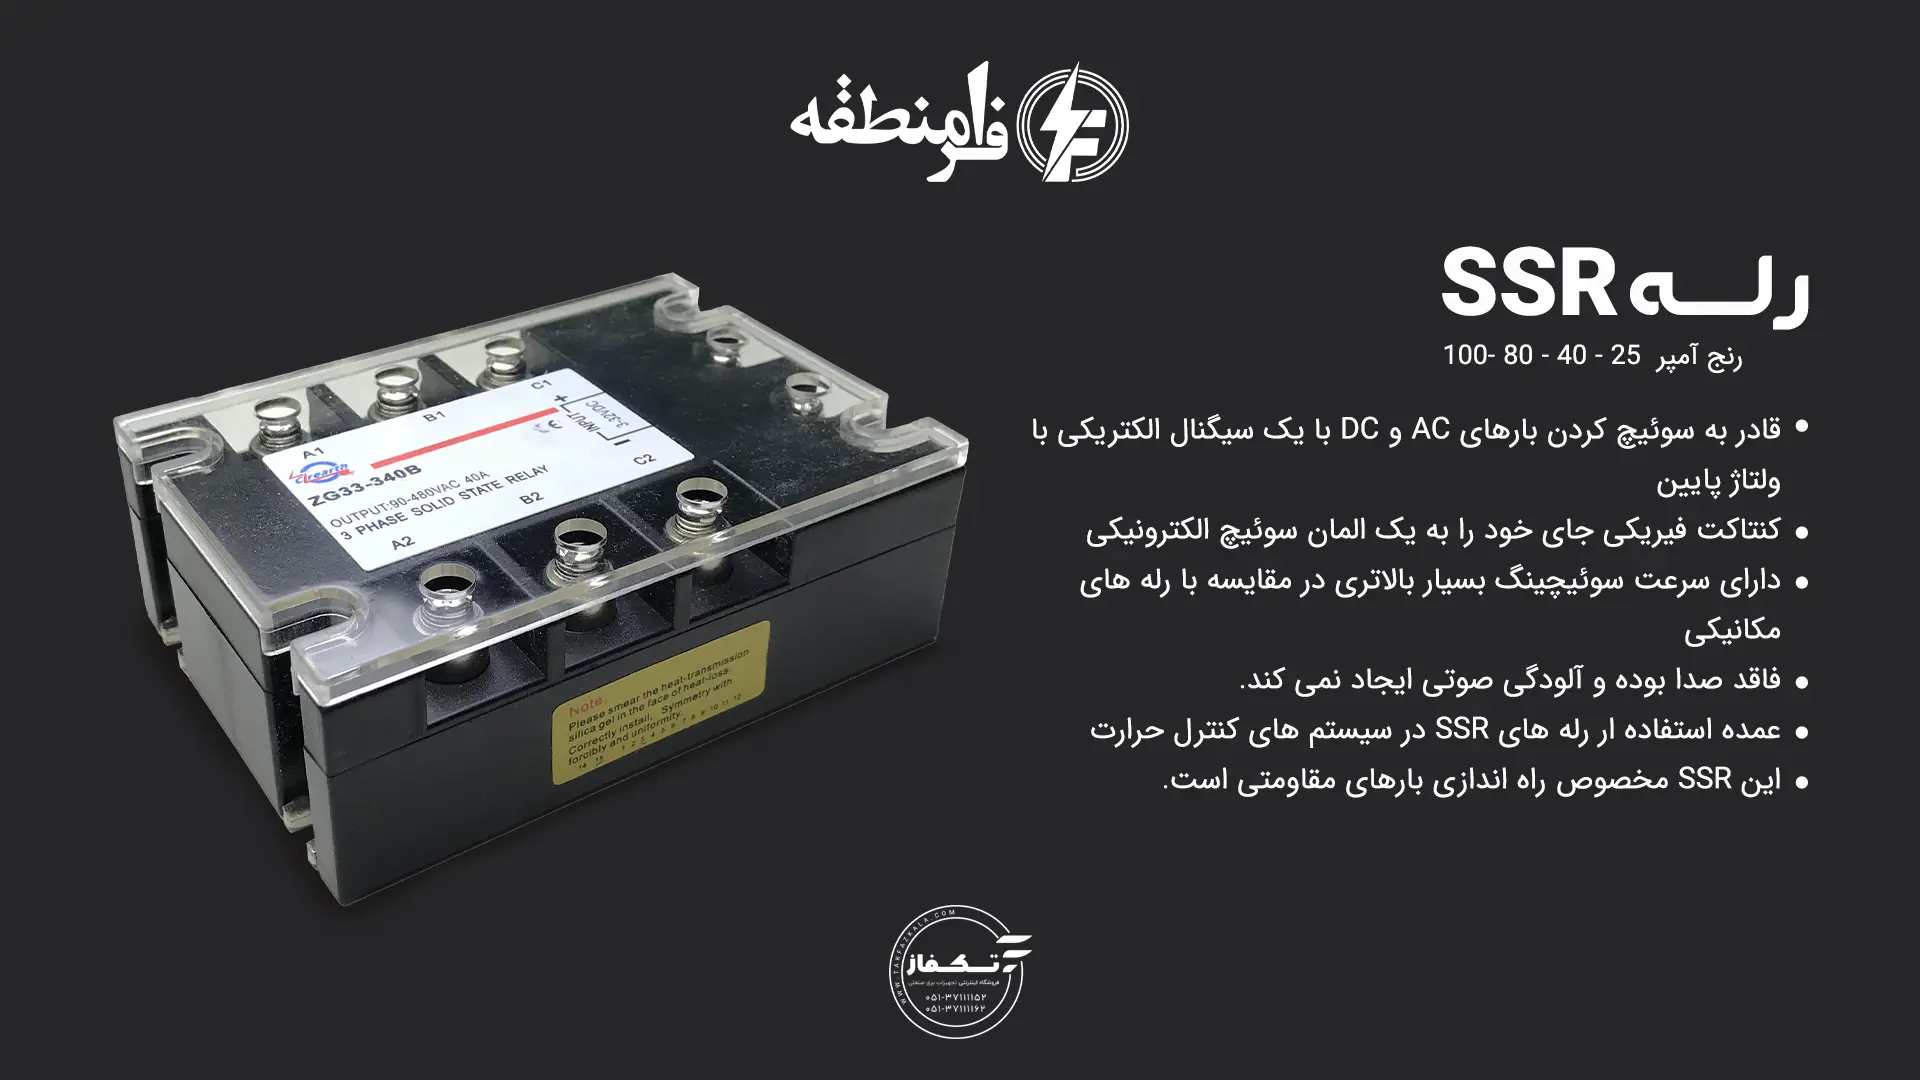 SSR relay – three phase 100 amp